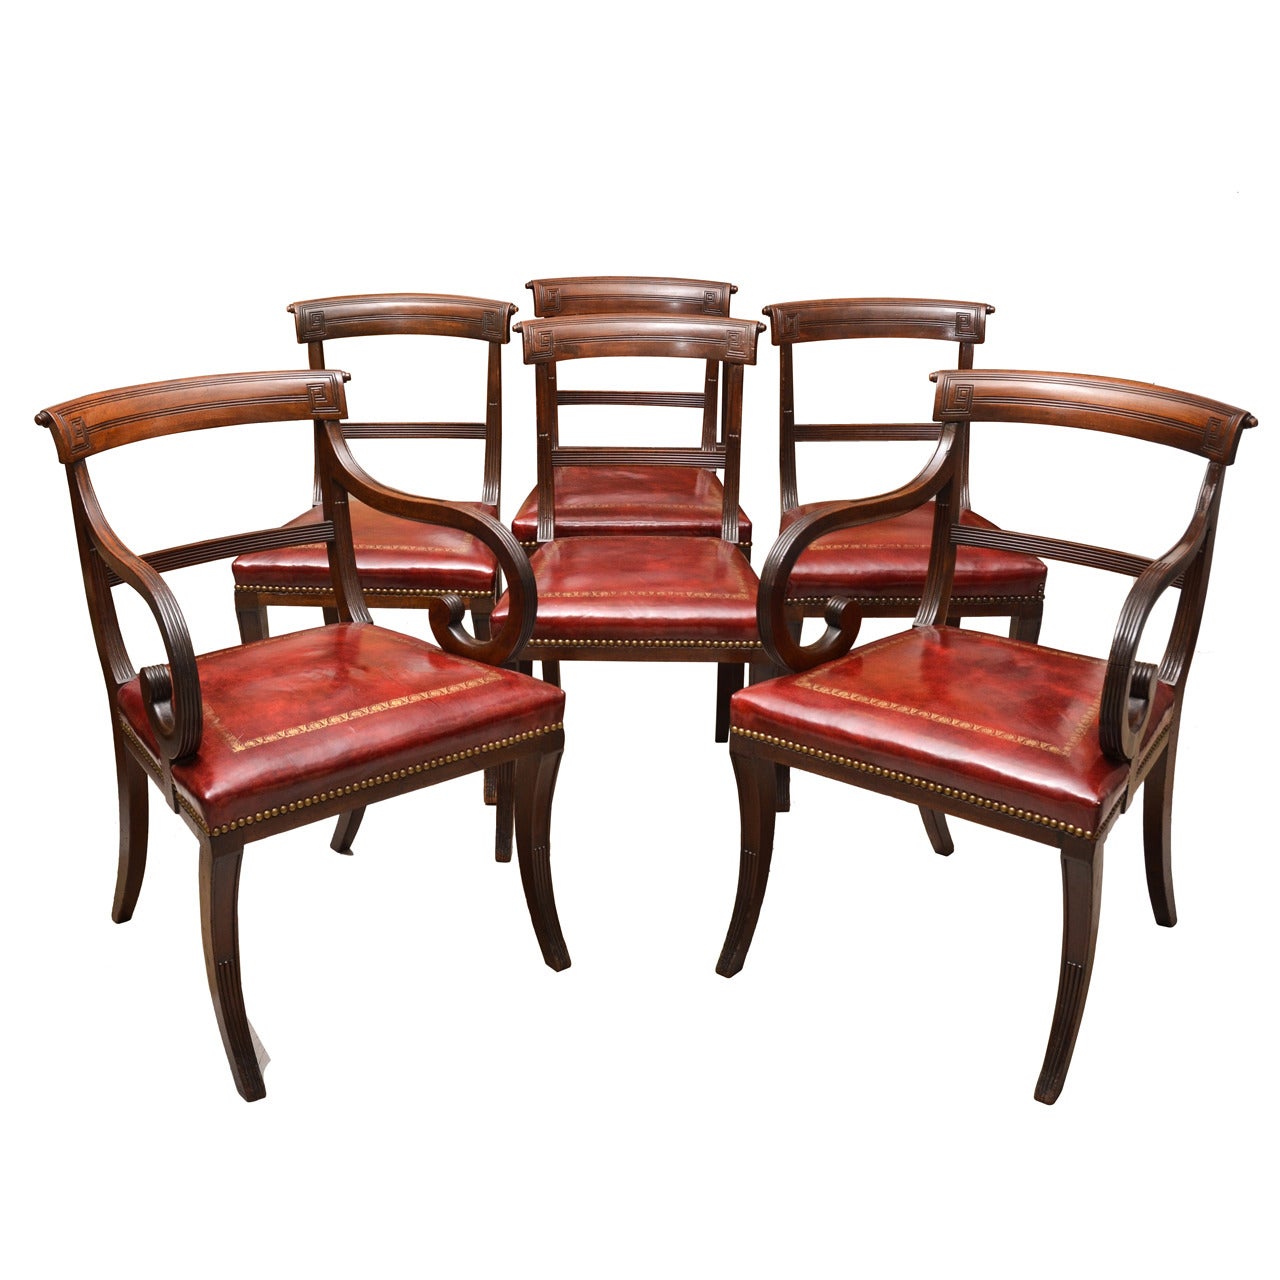 Circa 1900, English Regency Style Set of Six Mahogany Dining Chairs